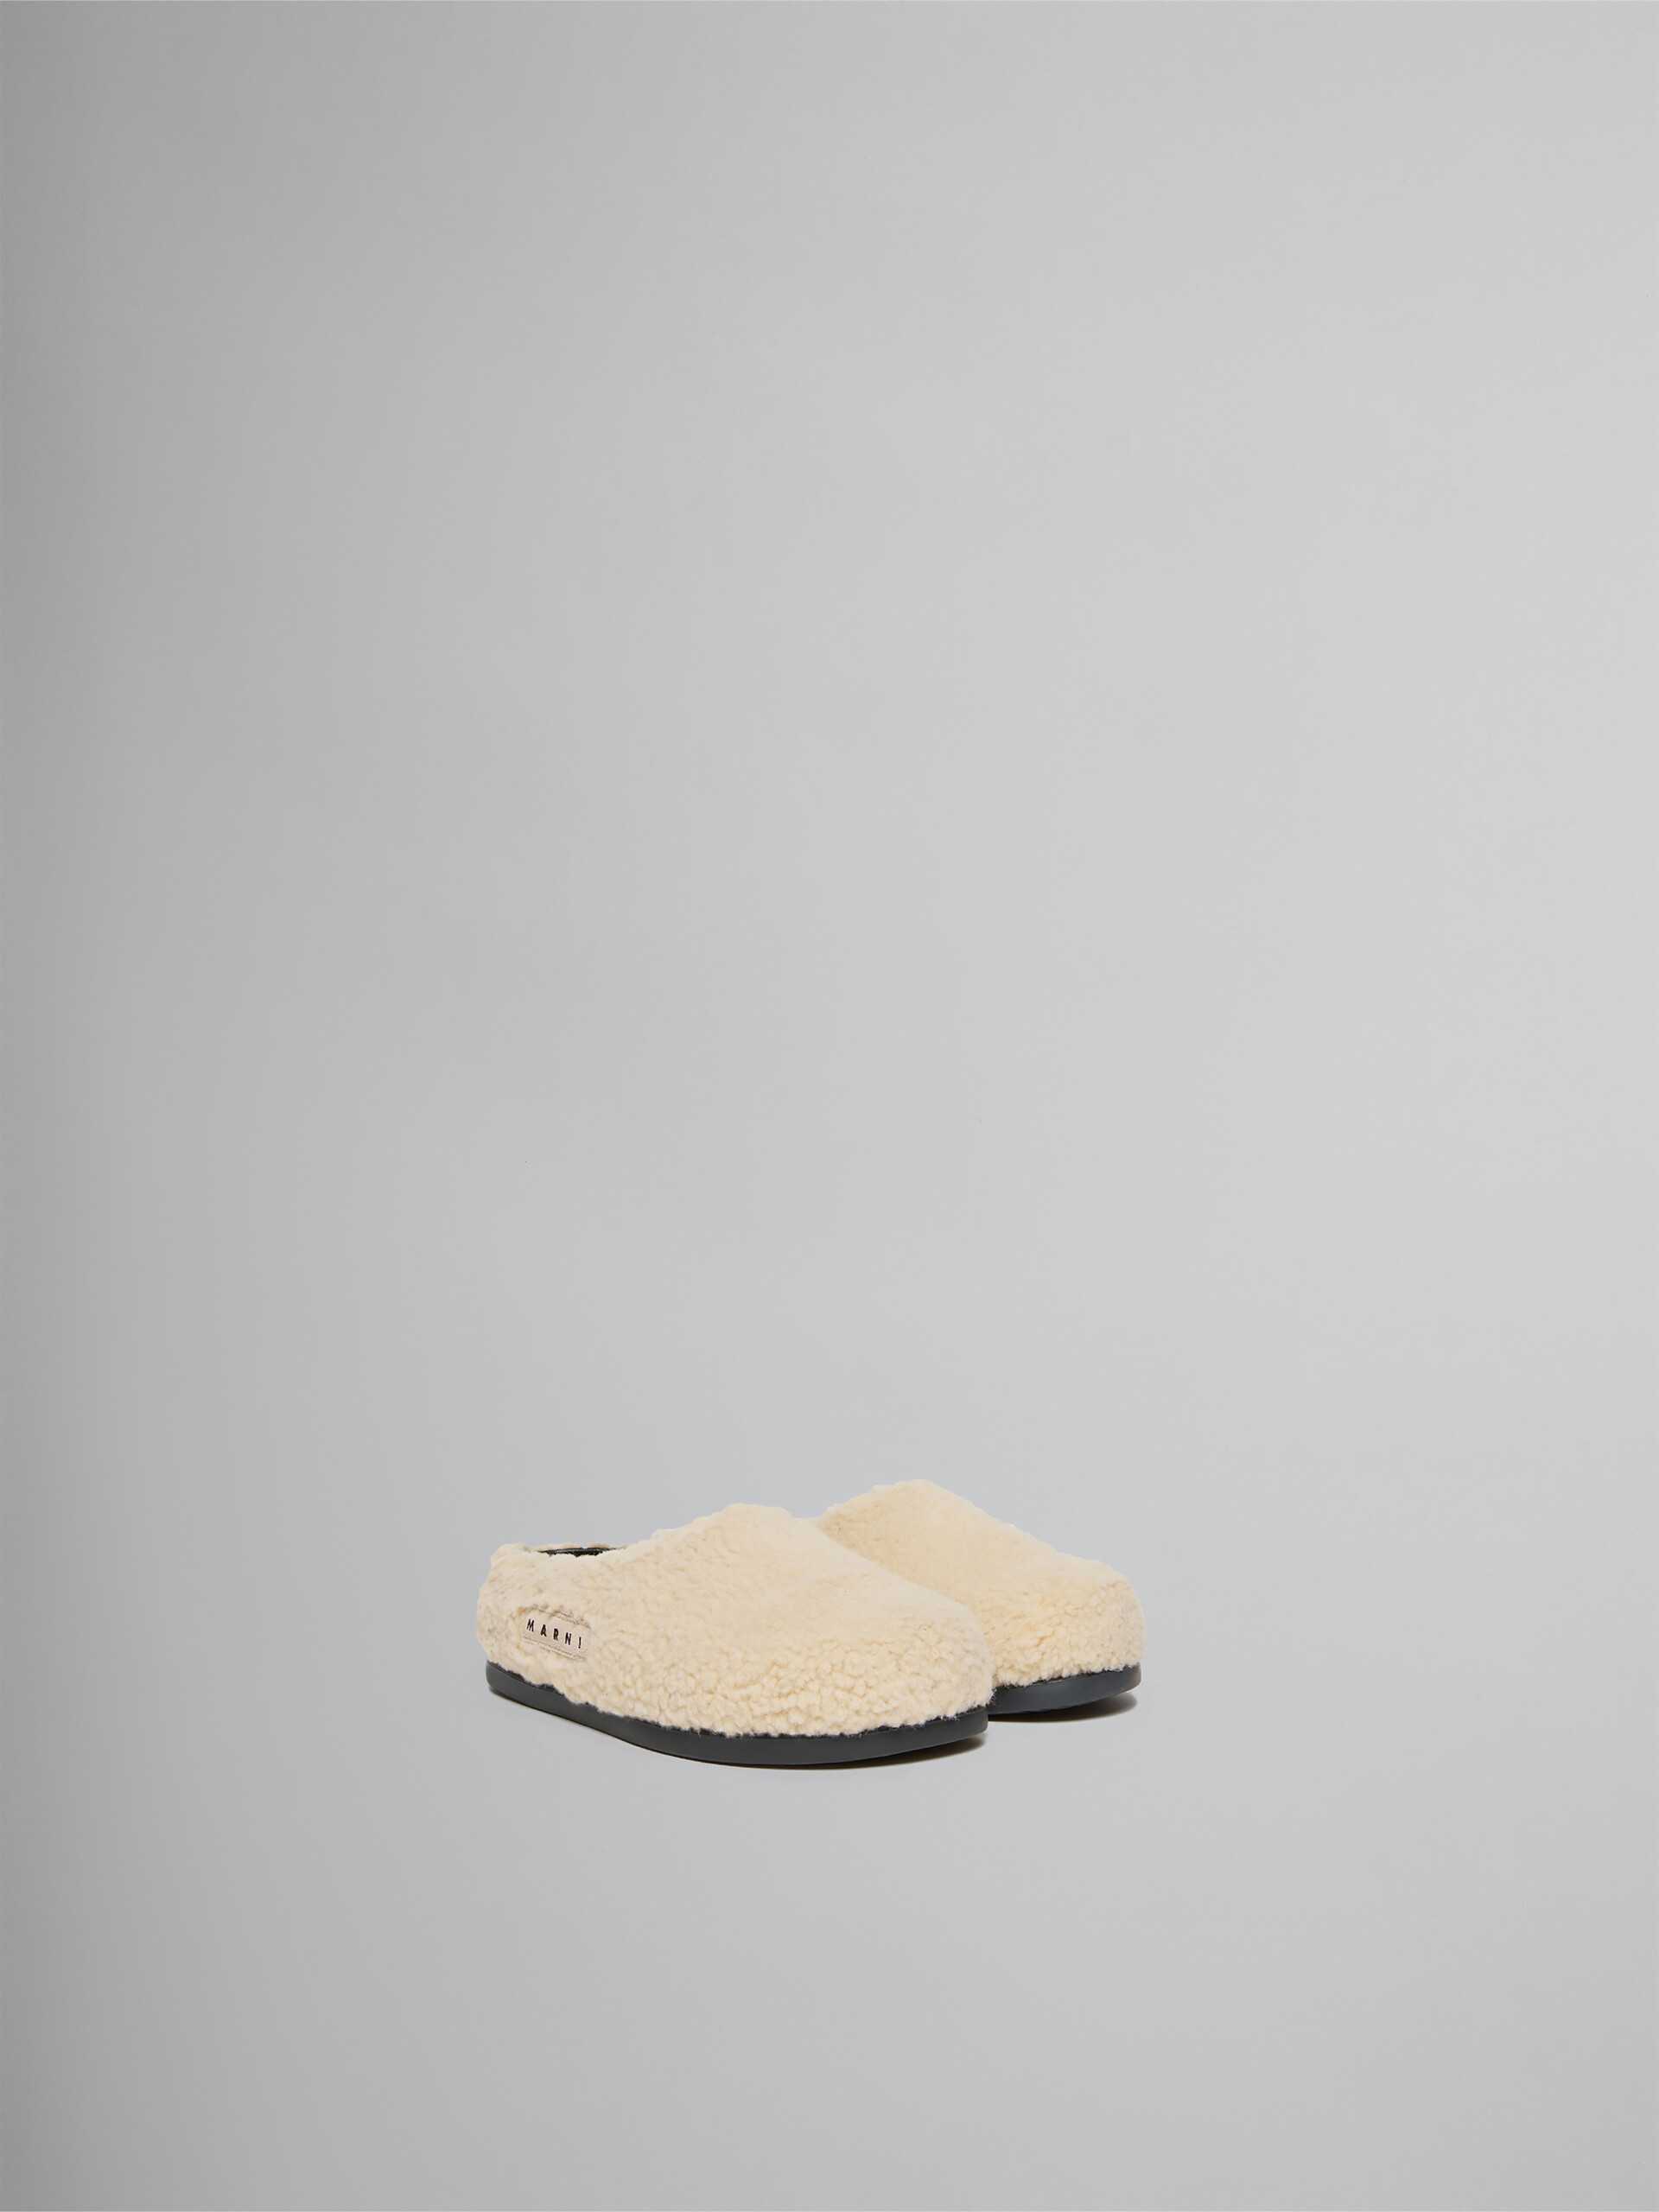 Cream faux shearling fussbett sabot - Sandals - Image 2